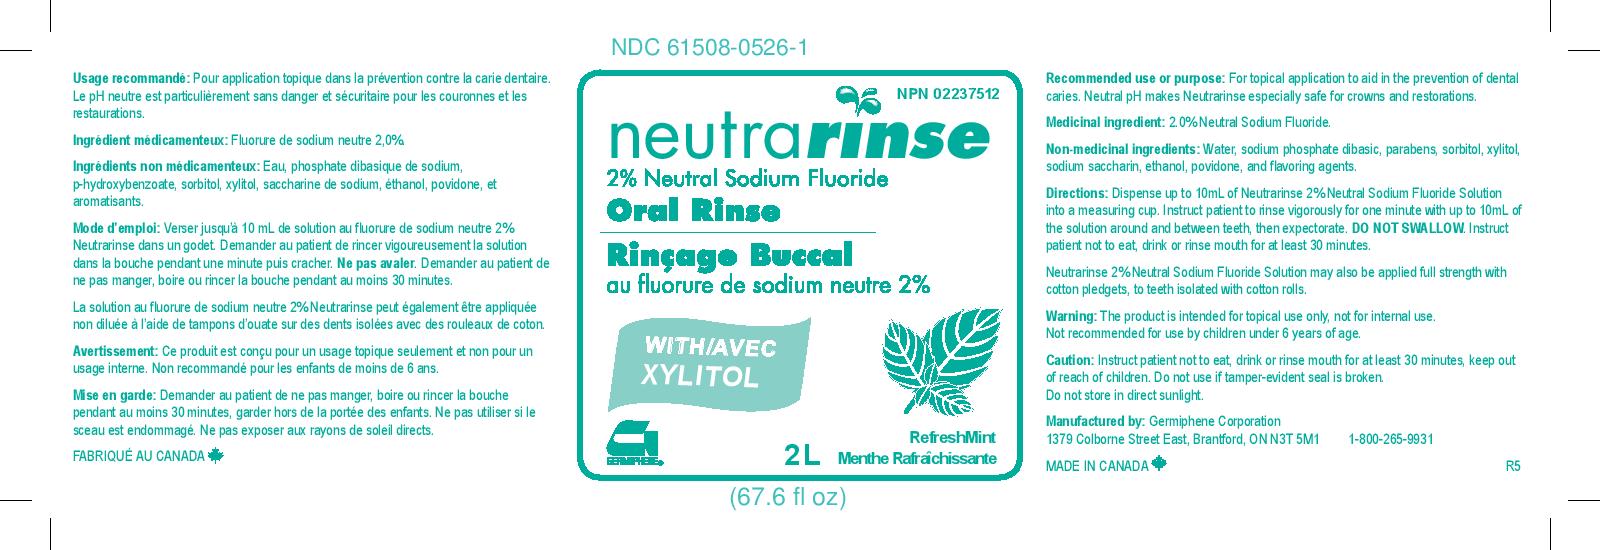 Is Neutrarinse 2% Neutral Sodium Floride Oral Rinse White Grape | Sodium Fluoride Rinse safe while breastfeeding